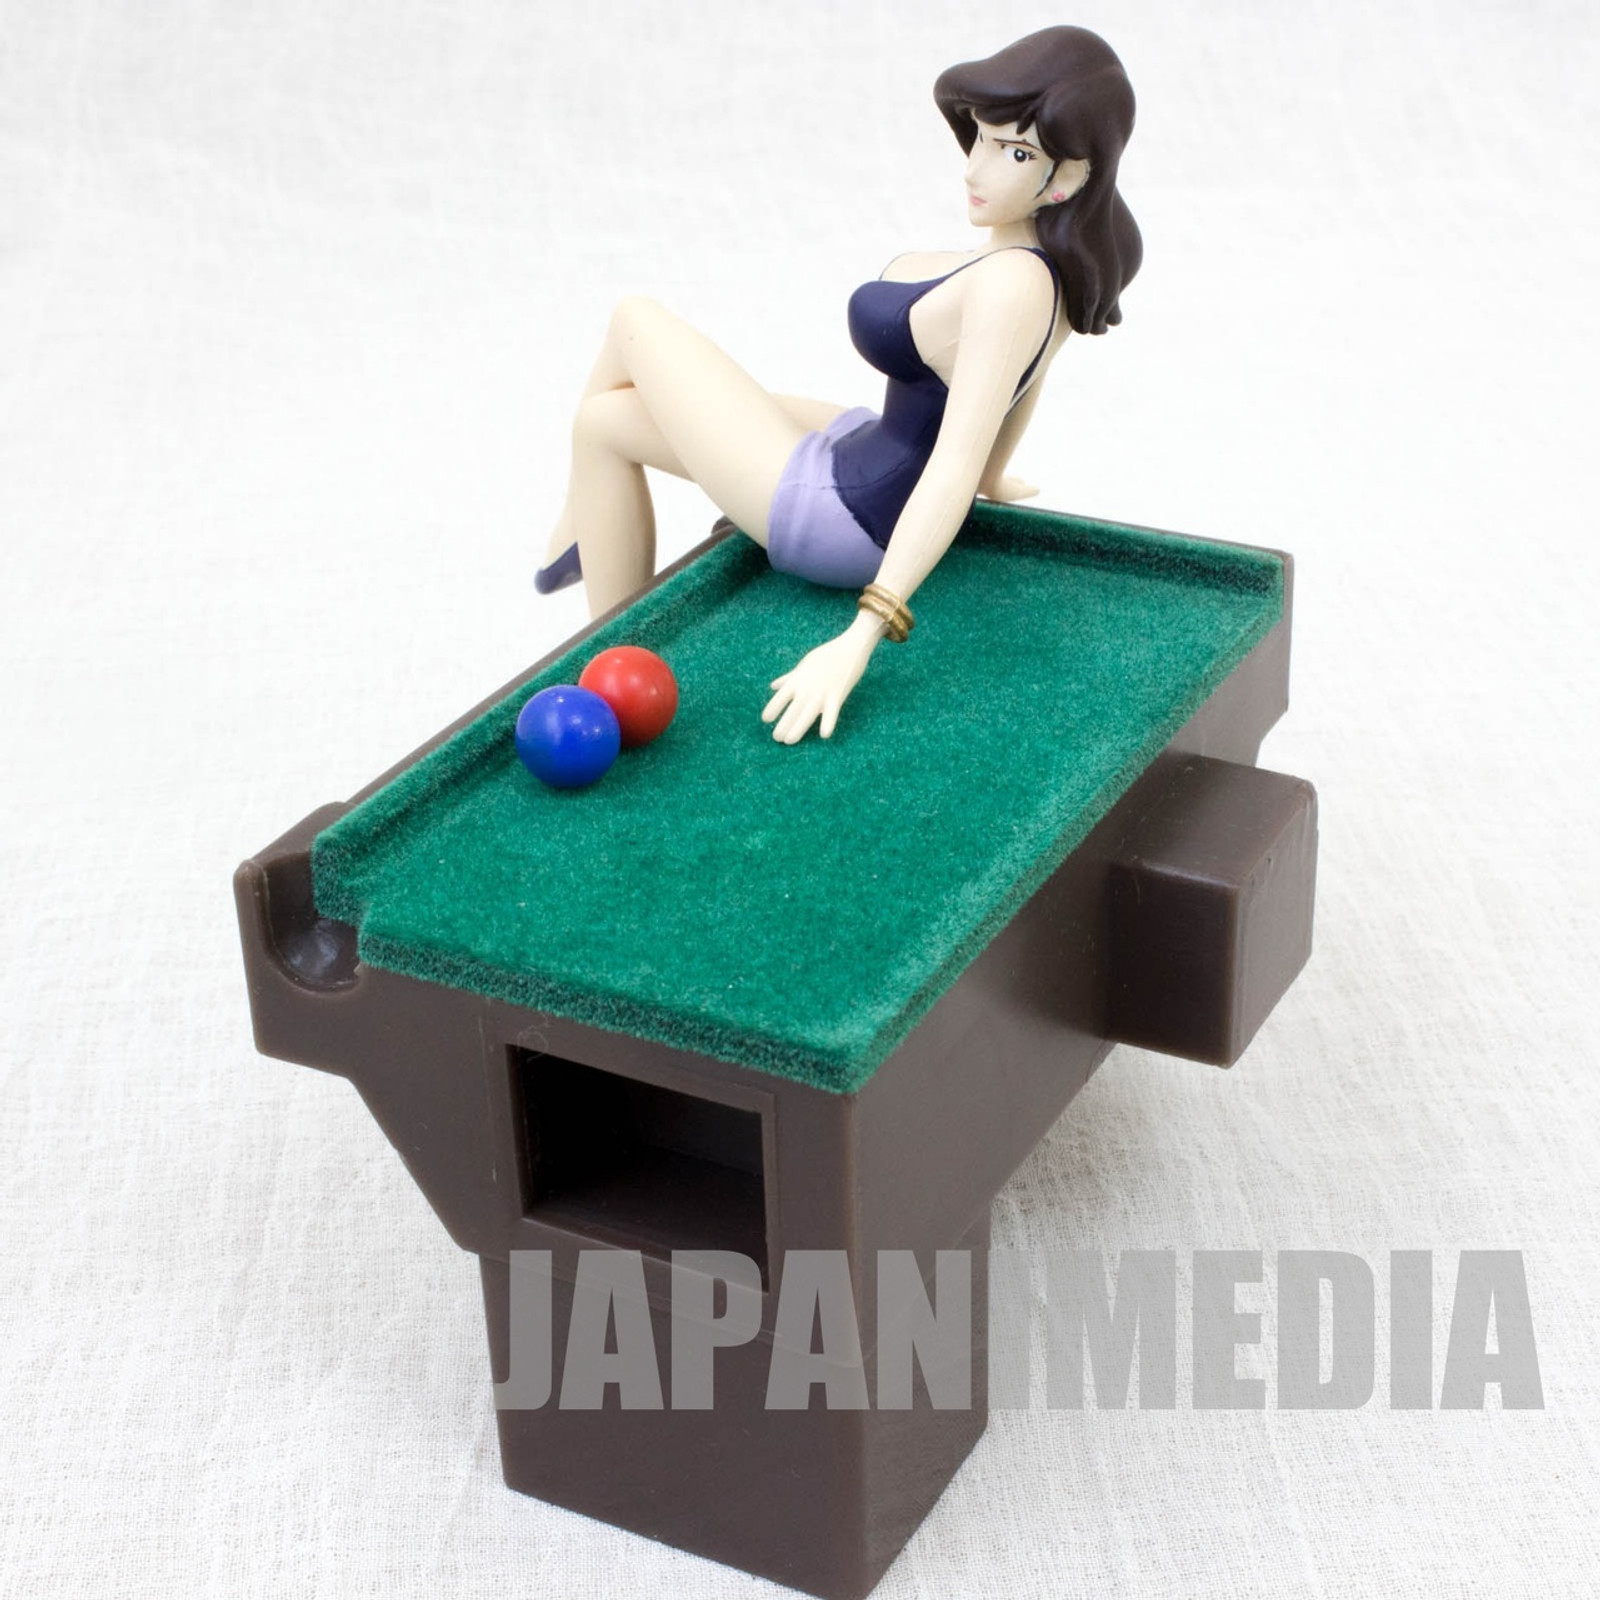 Lupin the Third (3rd) Fujiko Mine Opening Scene Billiards Figure JAPAN ANIME MANGA 2